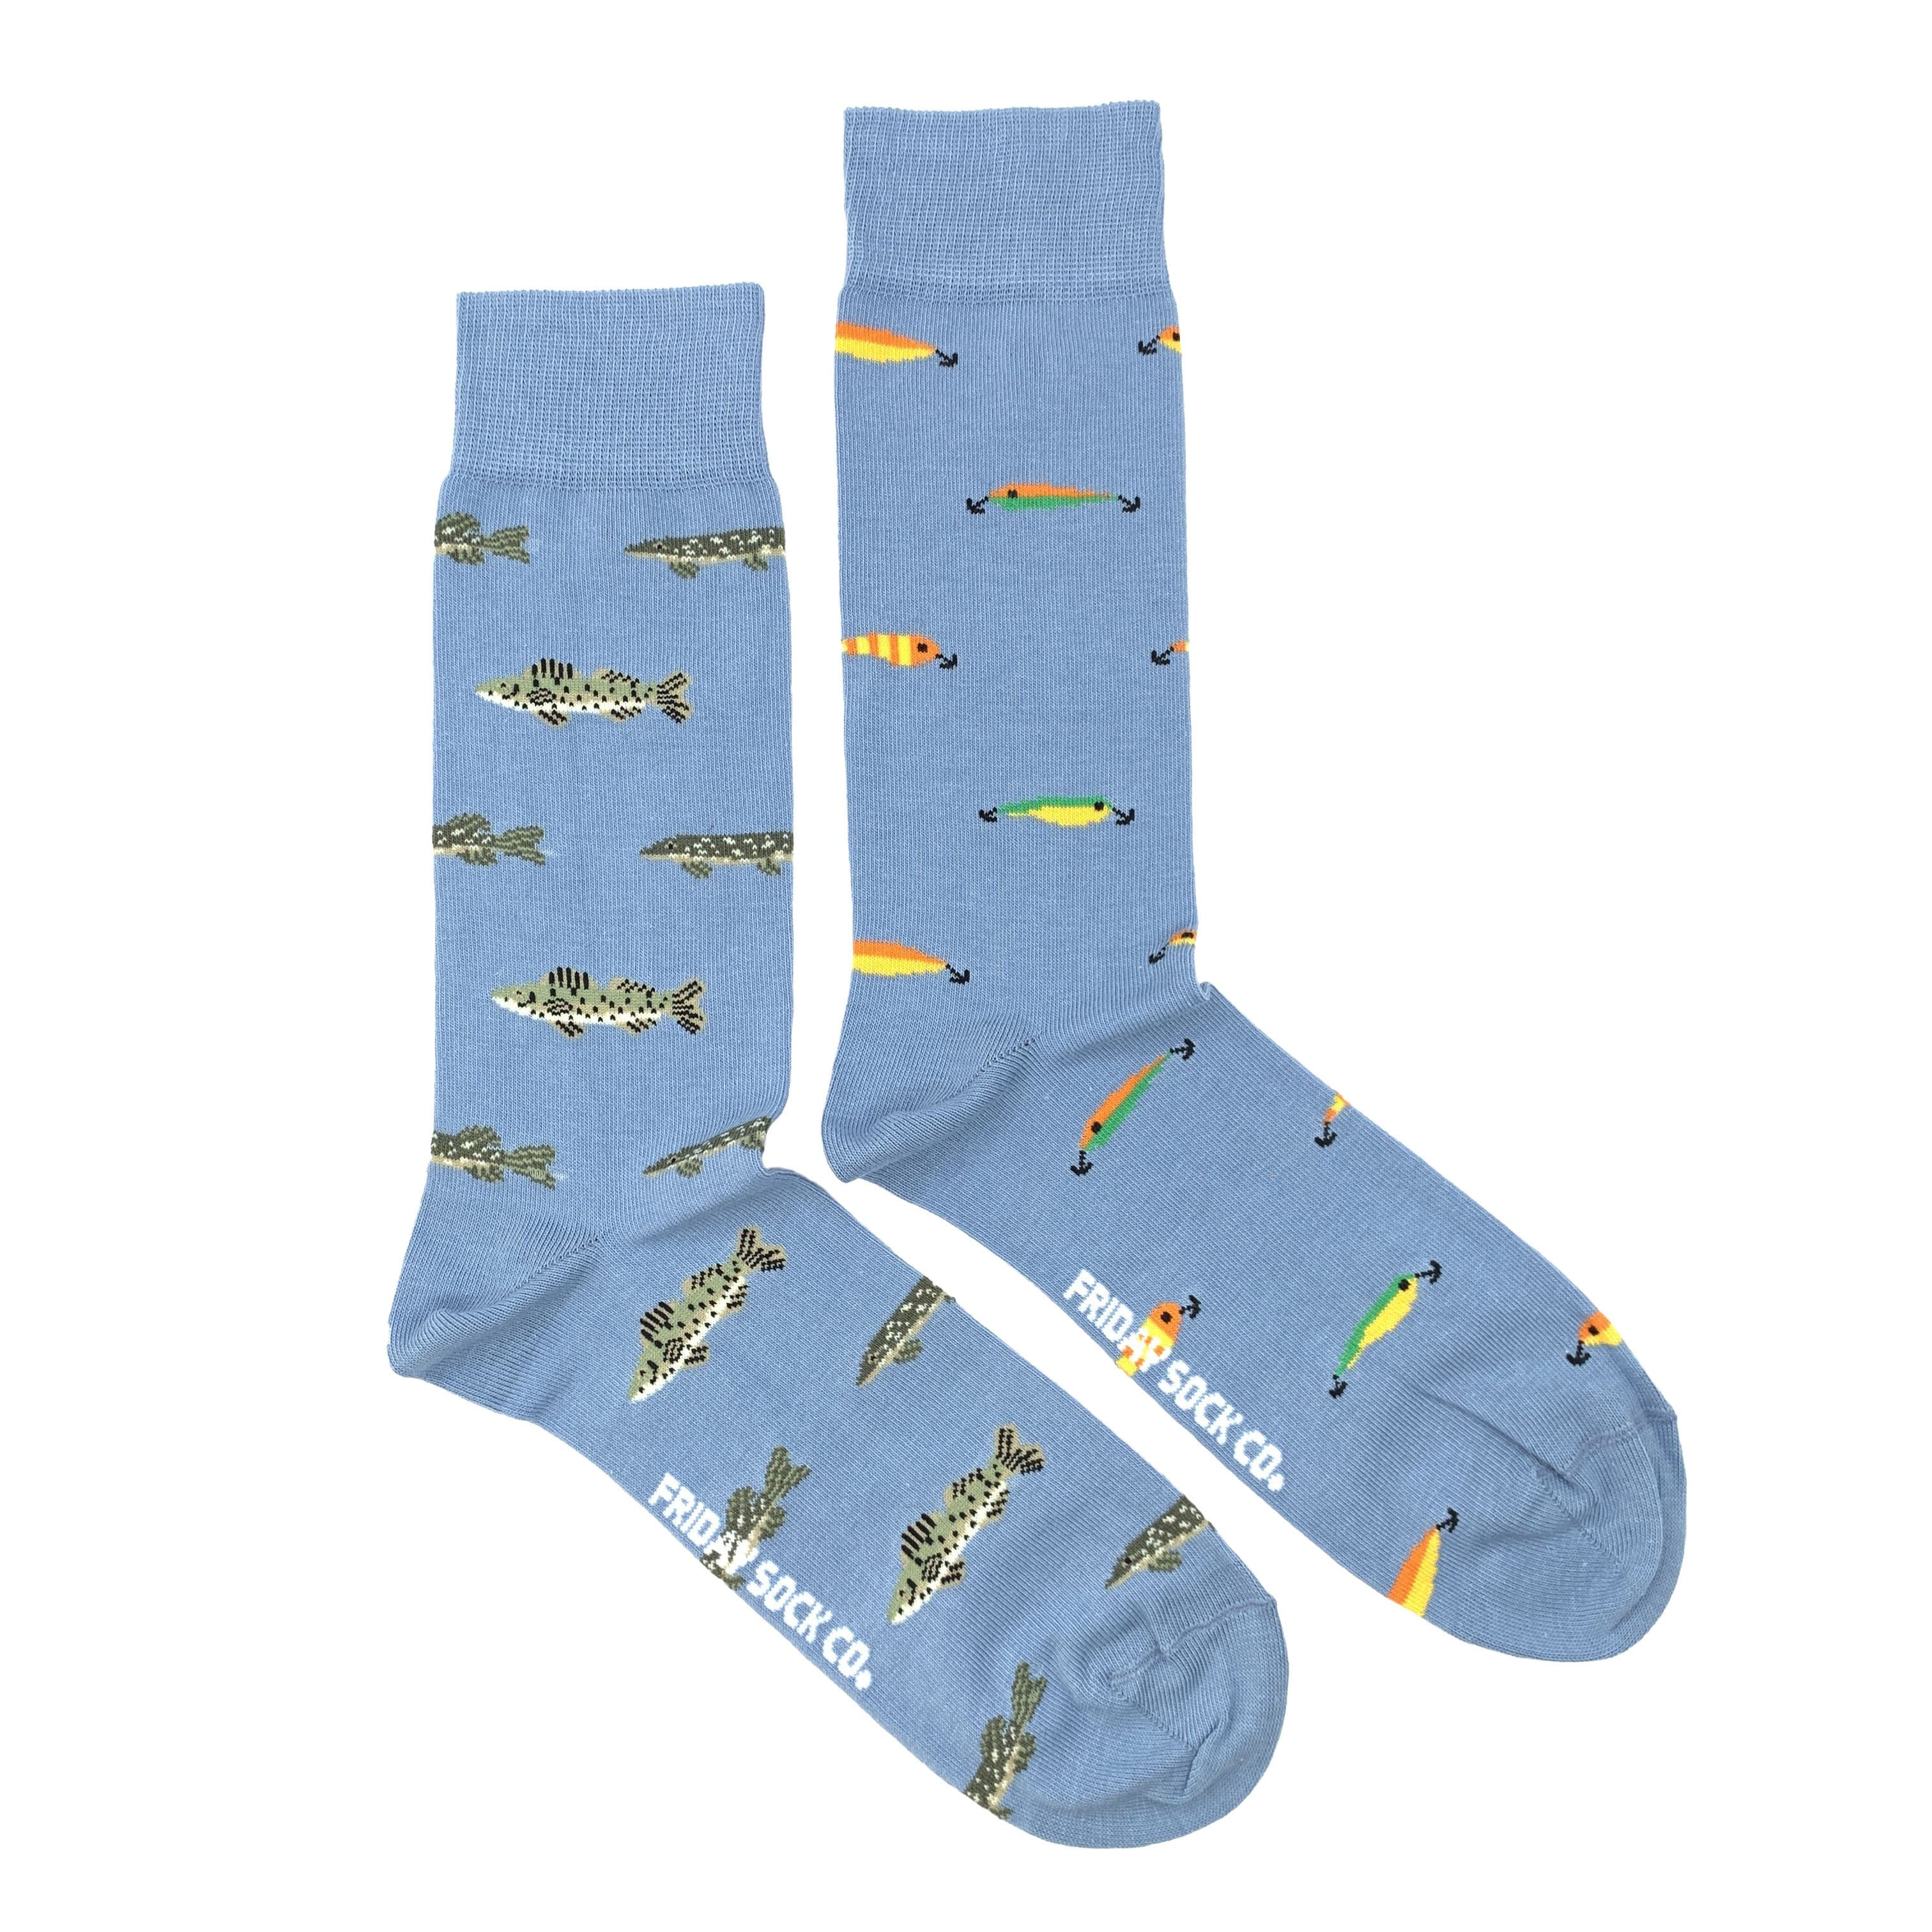 Men's Fish & Lures Socks | Mismatched by Design | Friday Sock Co.